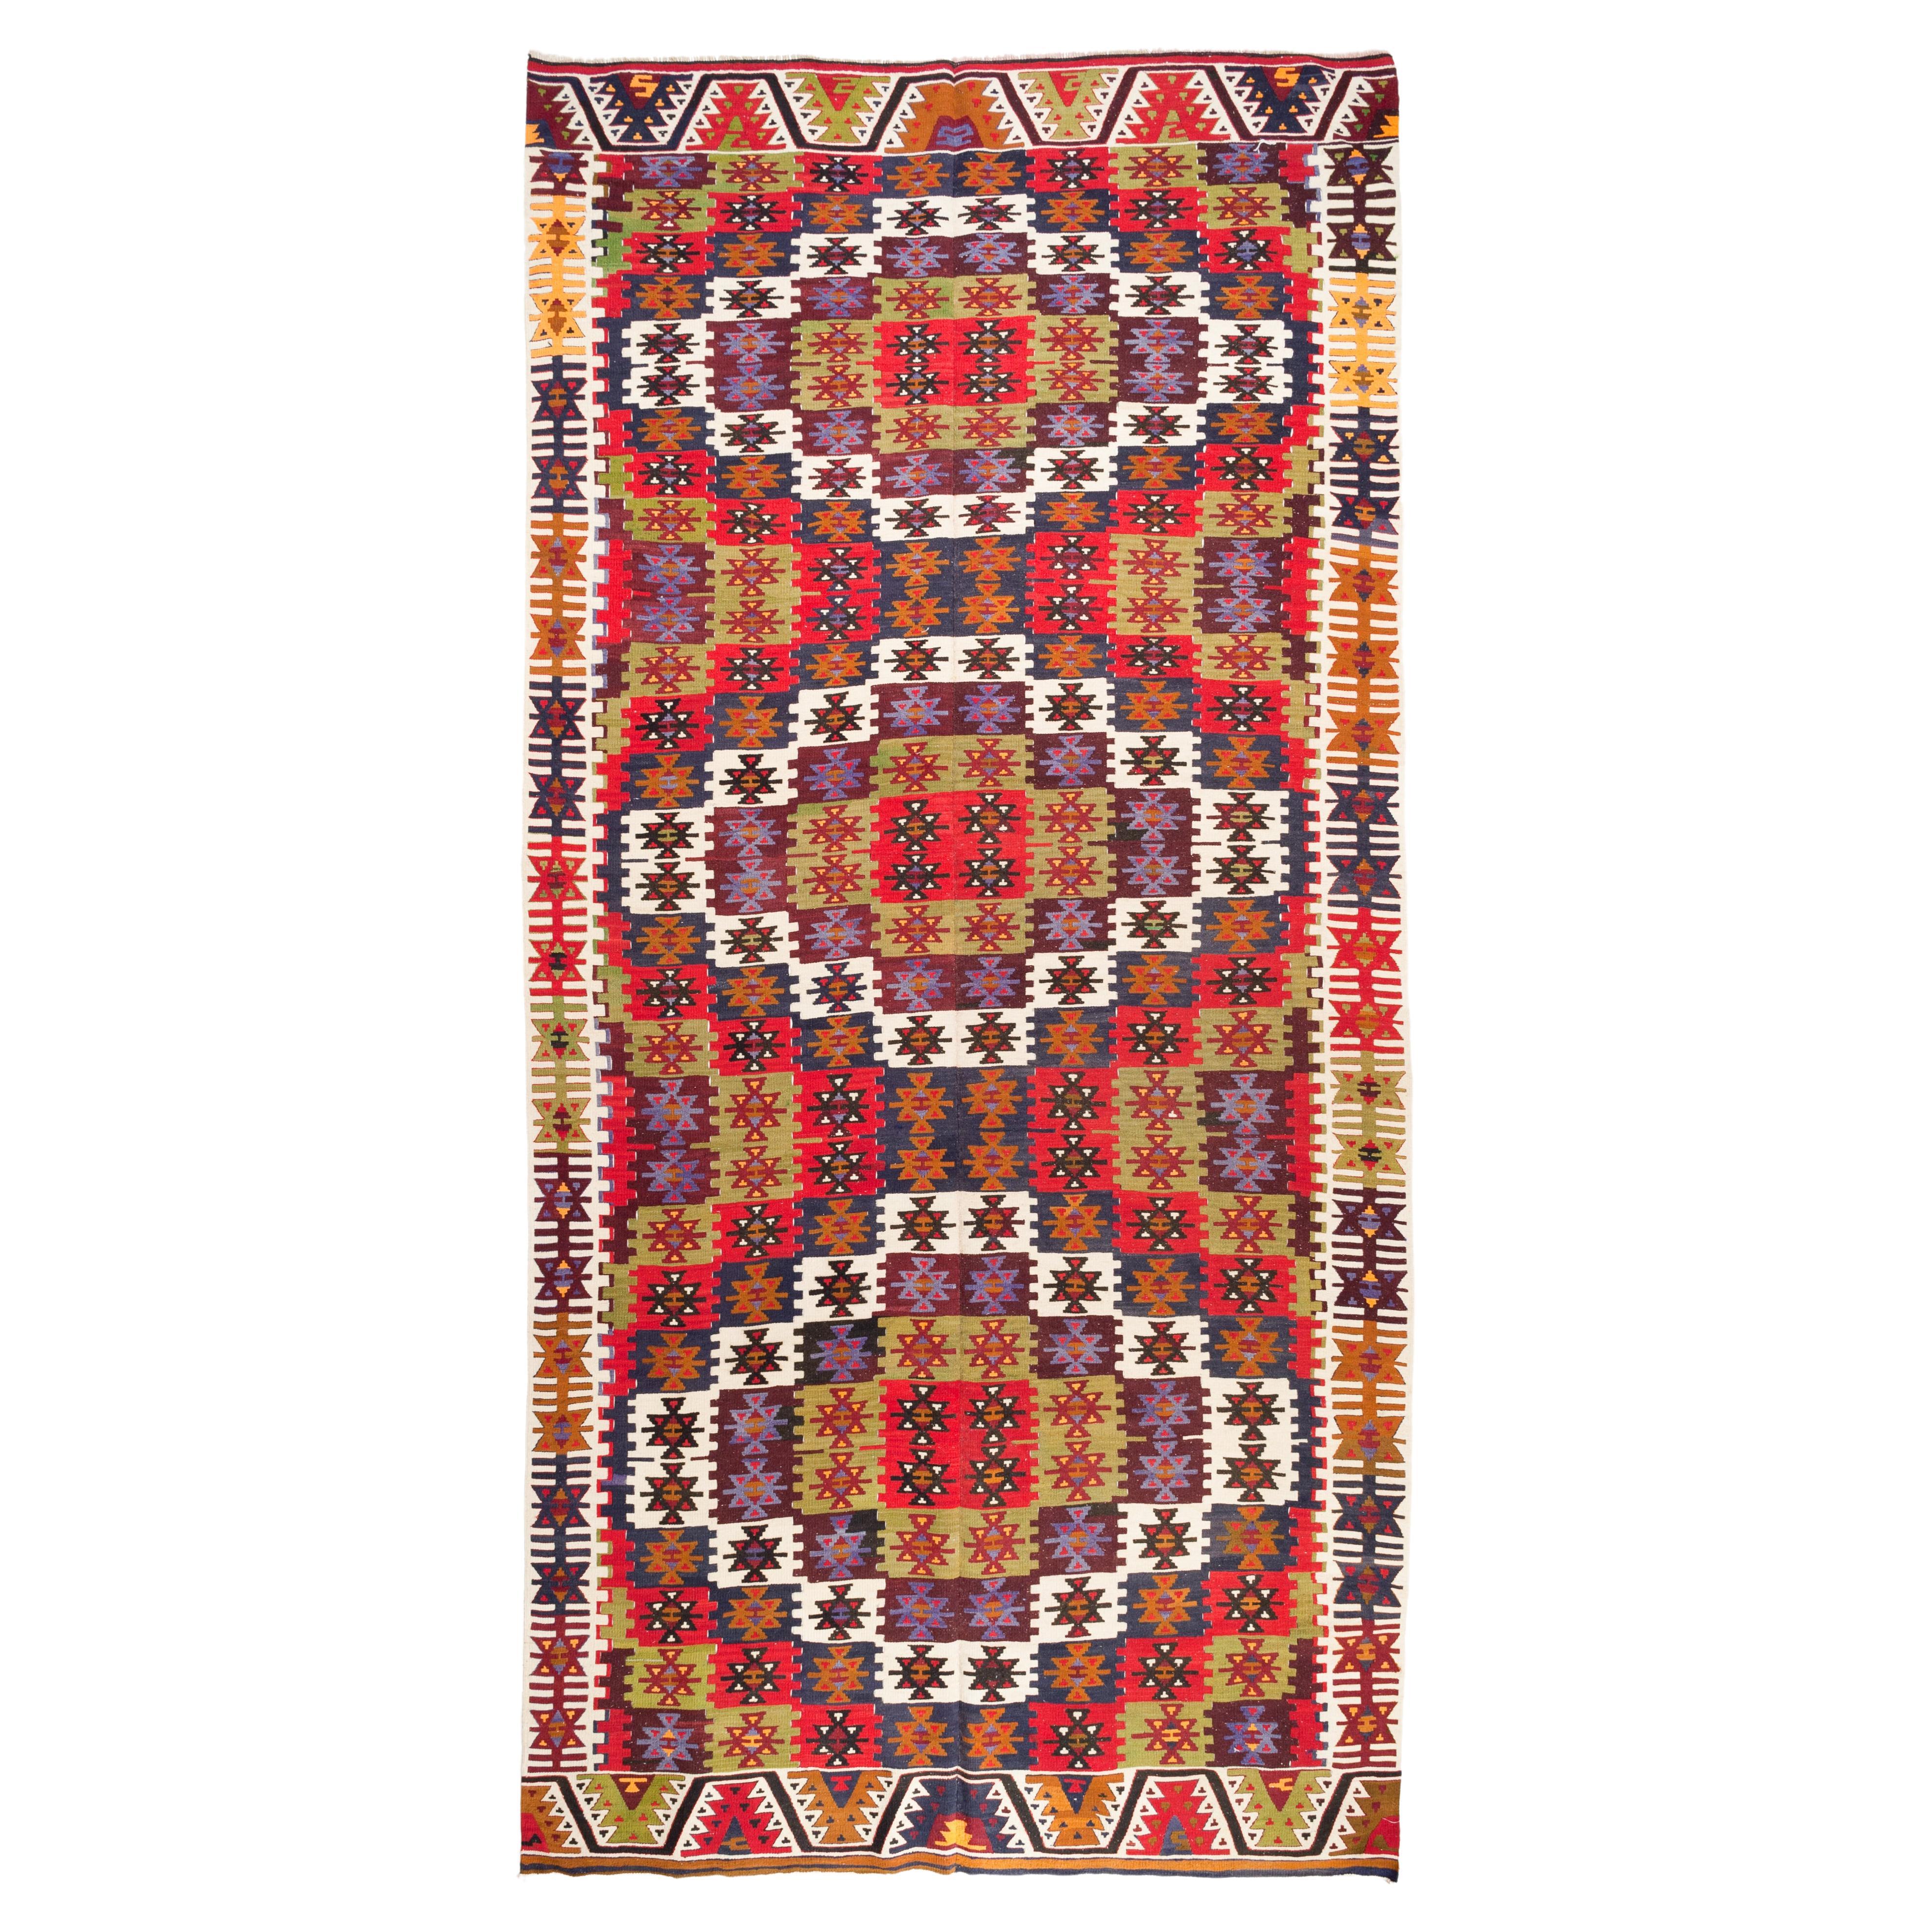 Old Adana Kilim Southern Anatolian Carpet Turkish Rug For Sale